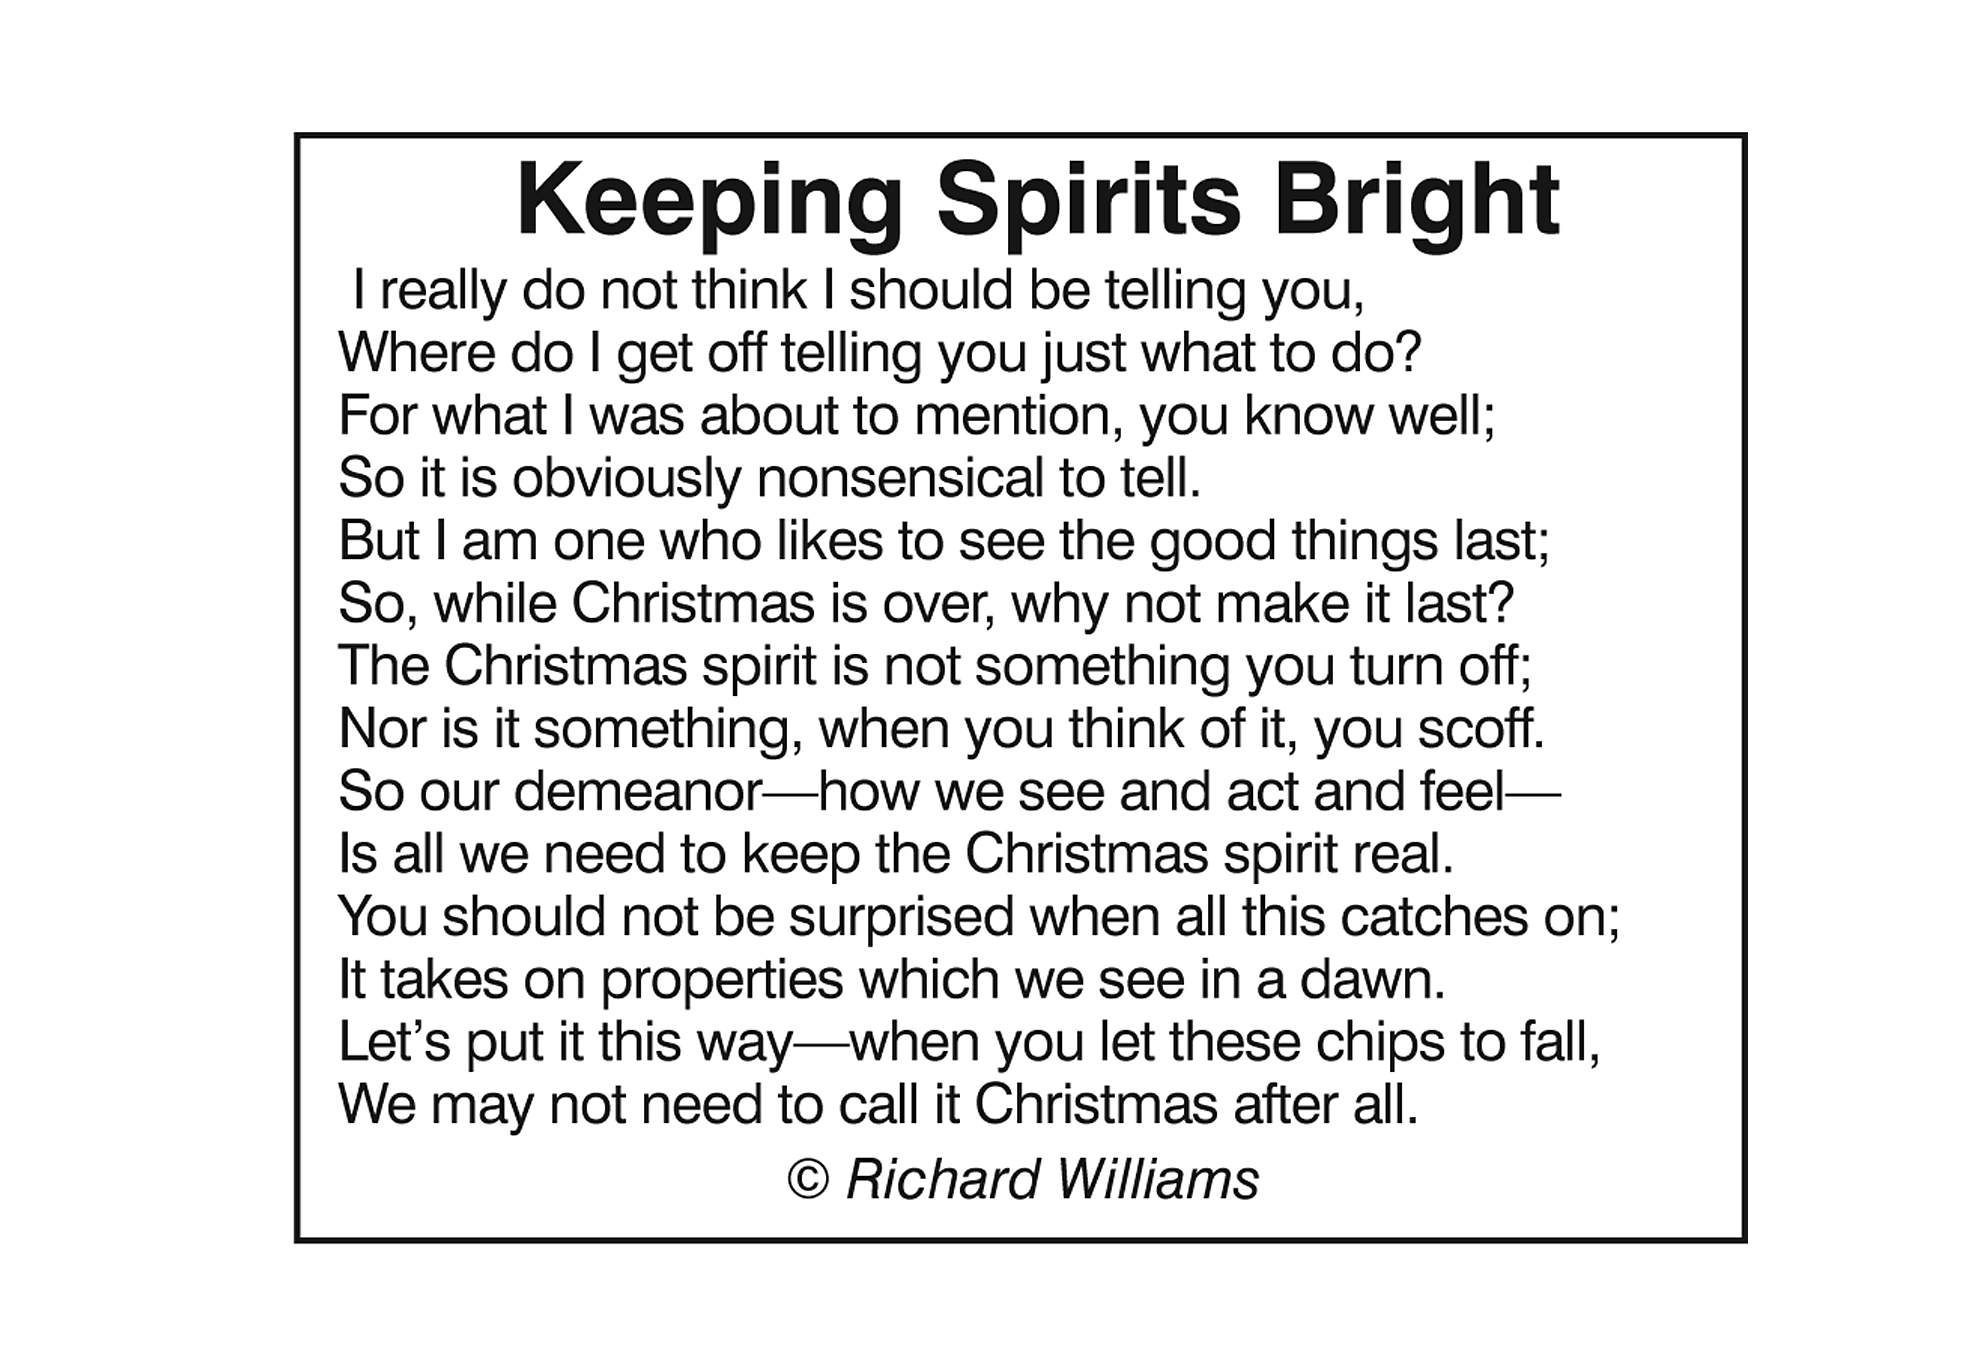 Richard Williams Poem: Keeping Spirits Bright